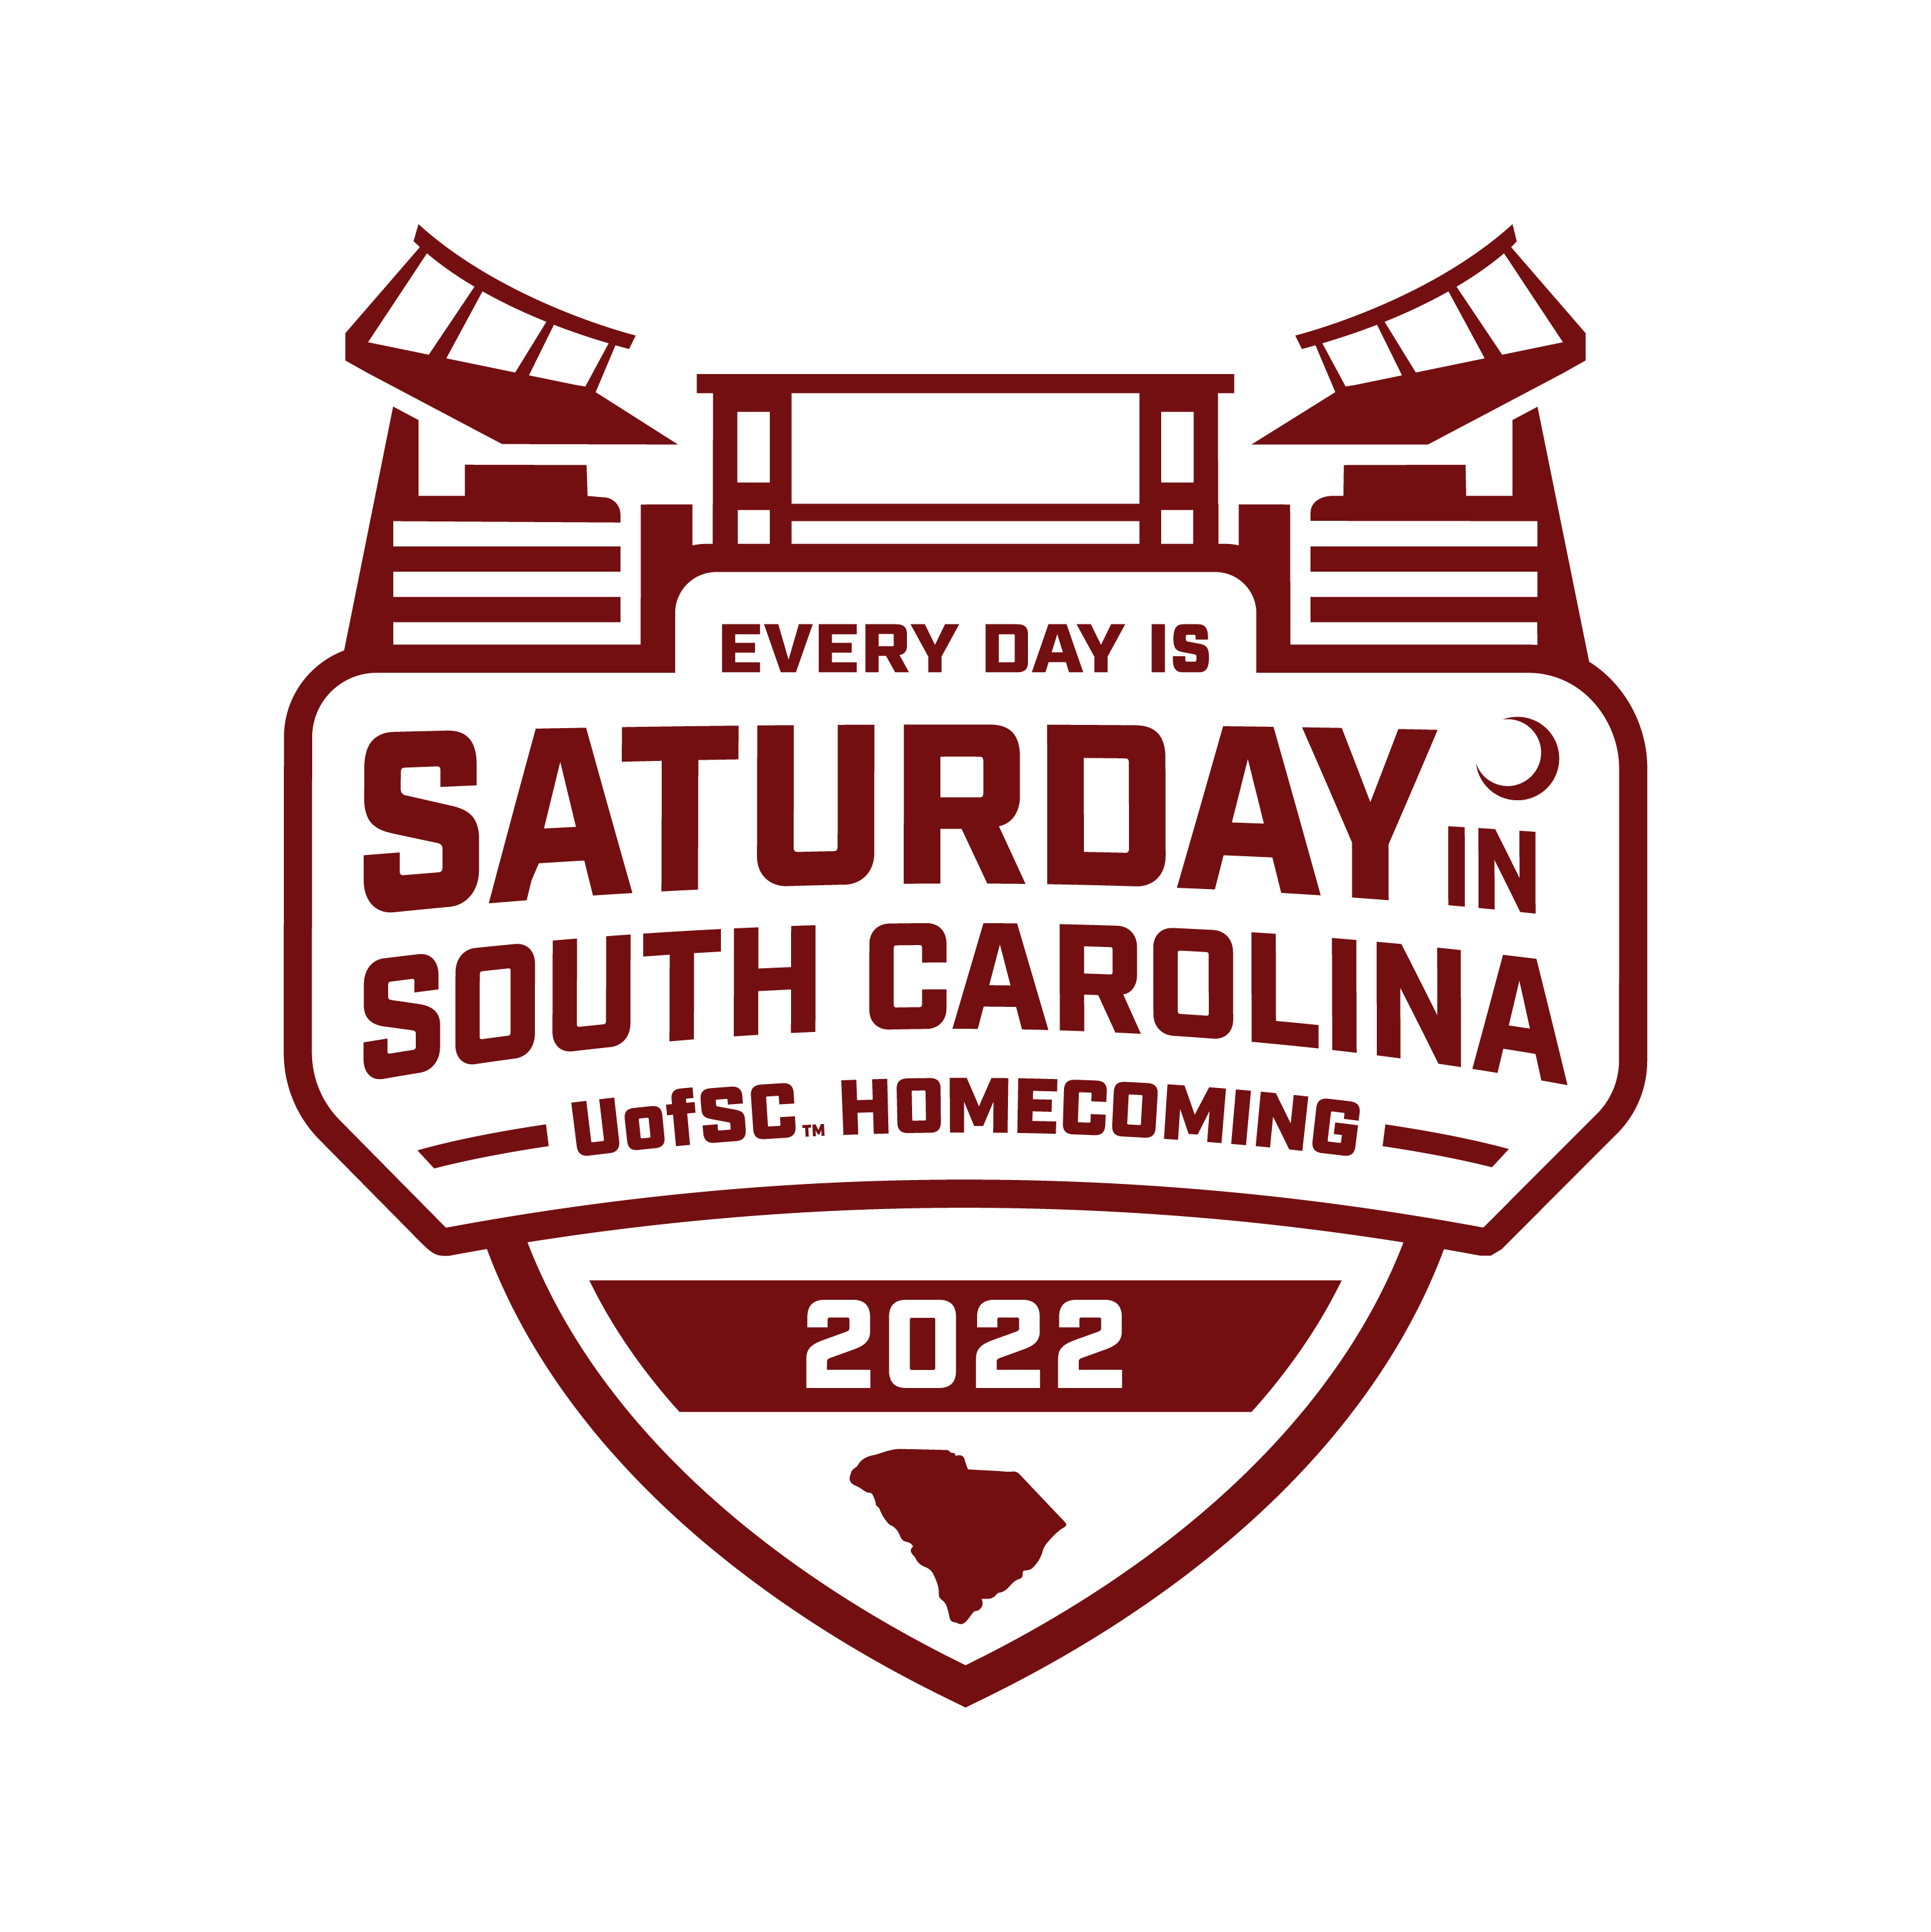 Garnet homecoming logo saying "Every Day is Saturday in South Carolina - UofSC Homecoming 2022"